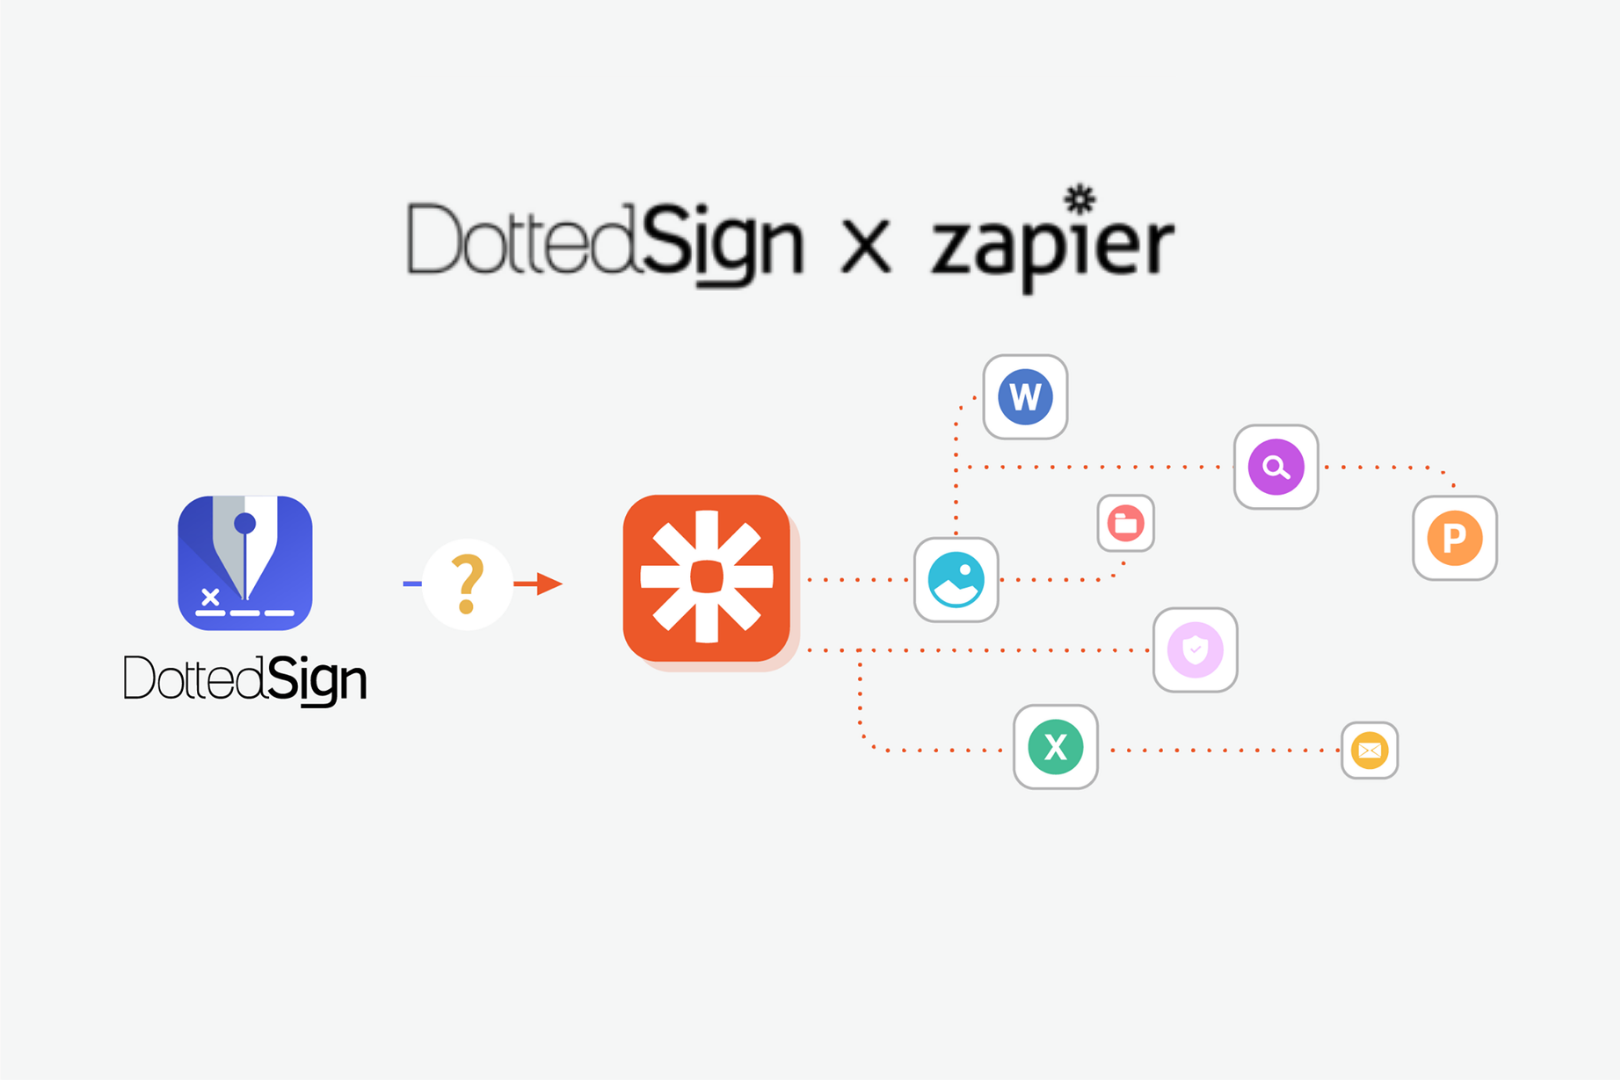 DottedSign integrations on Zapier